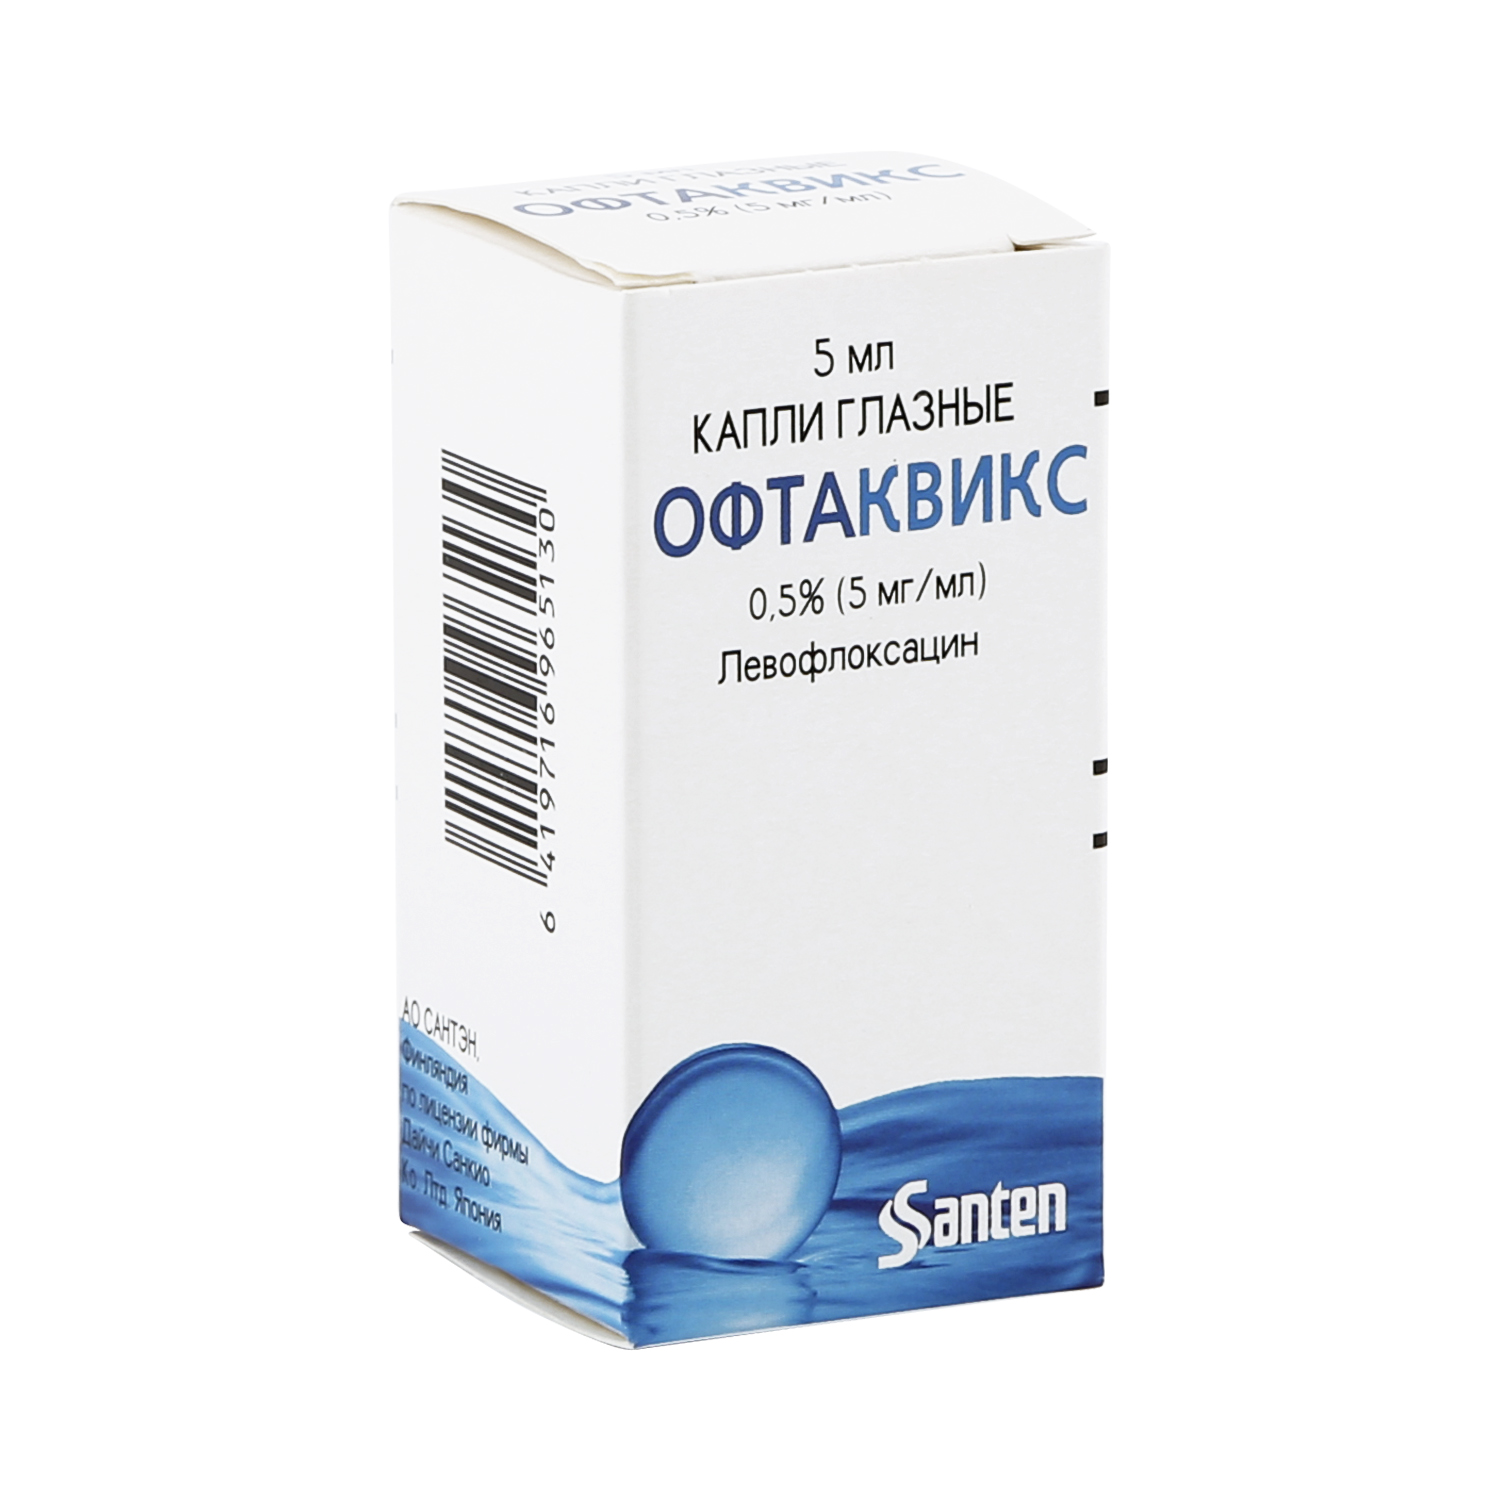 Офтаквикс капли гл. 0,5% 5мл